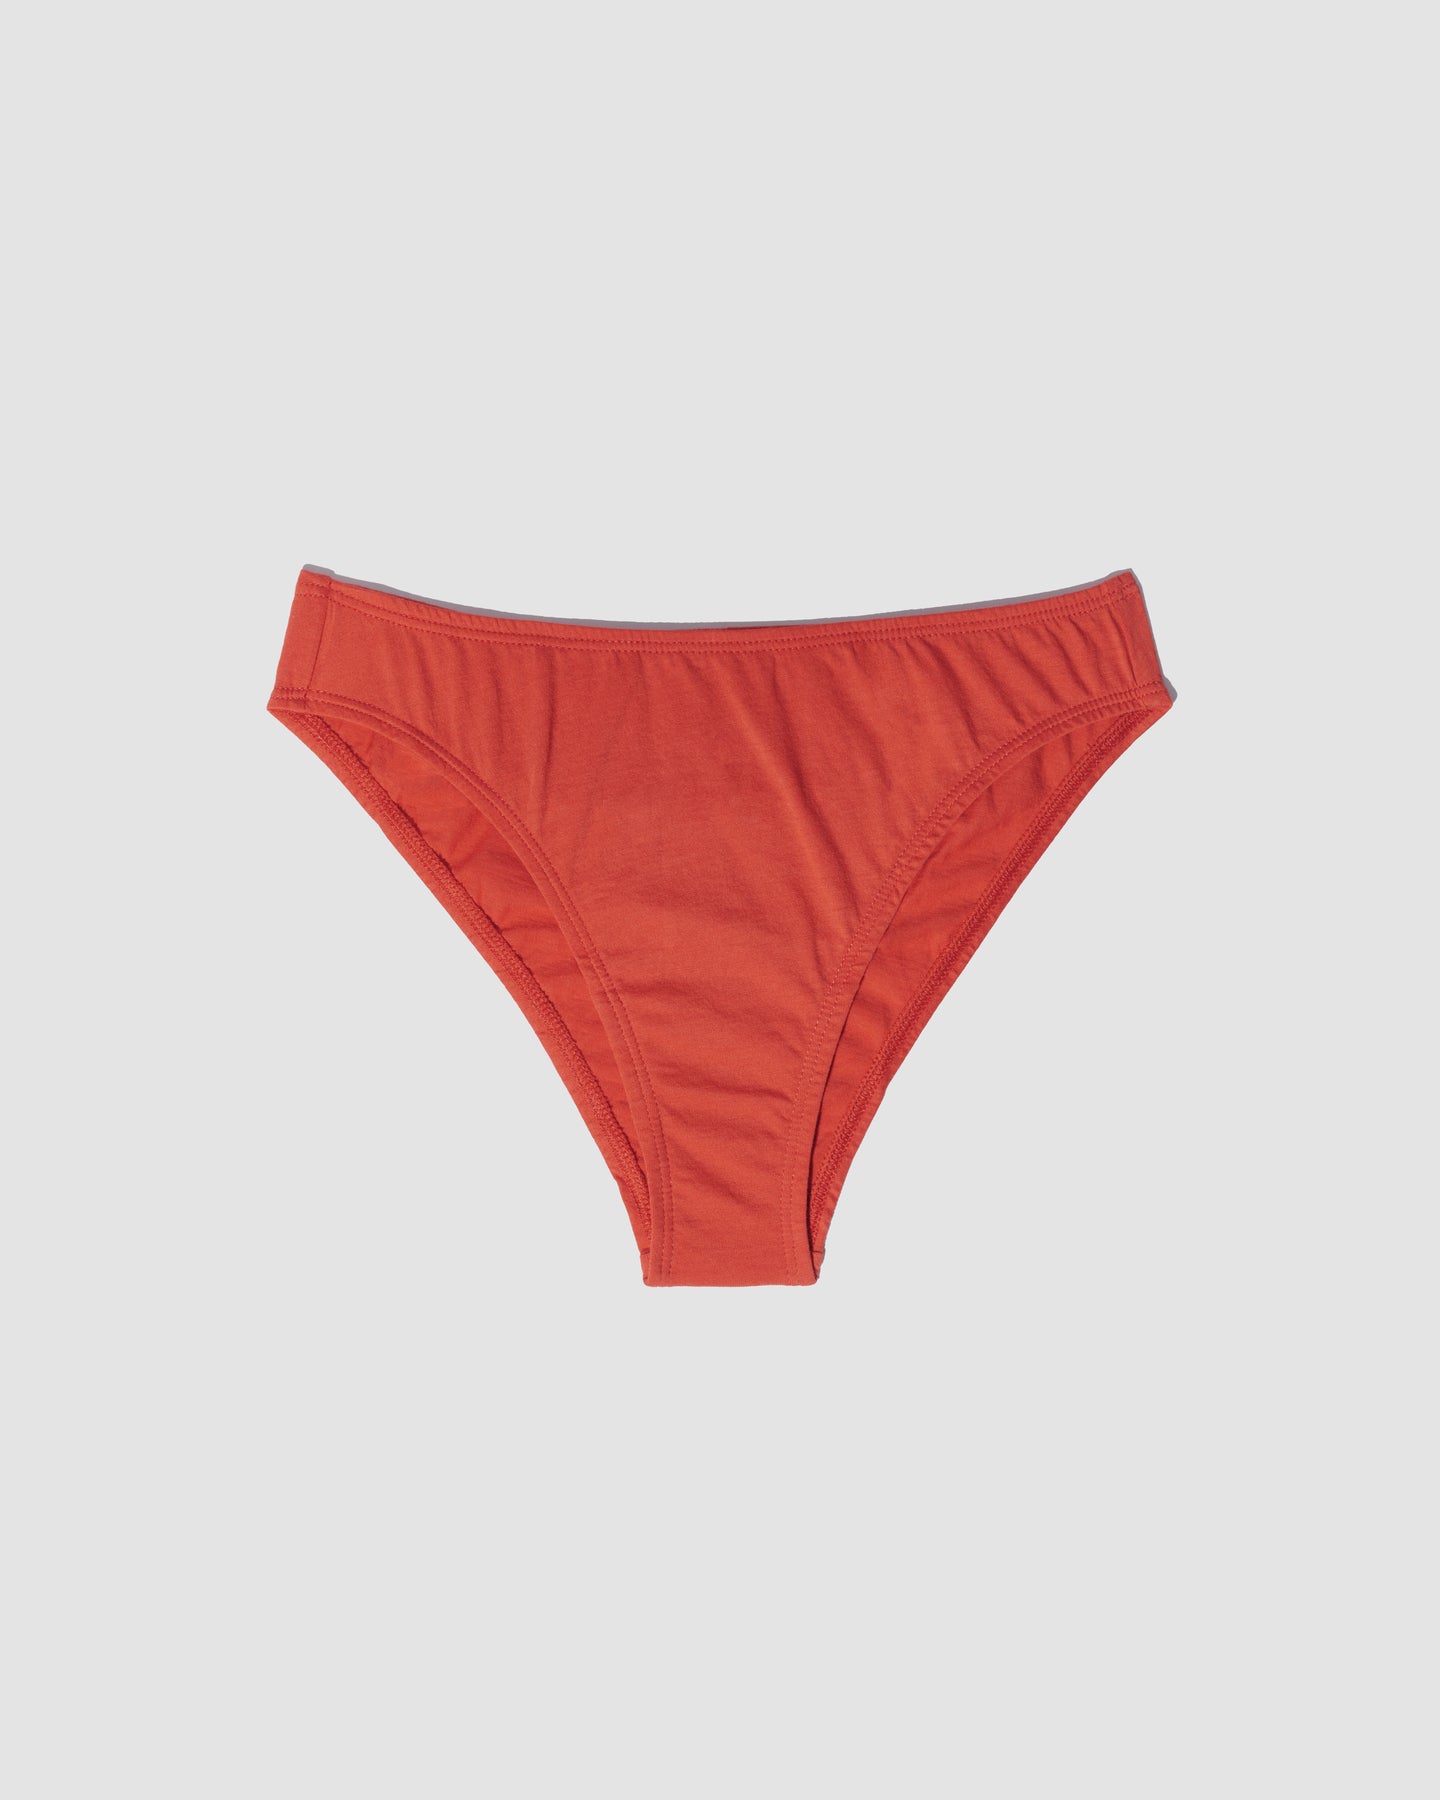 Cathalem French Cut Underwear for Women Women Panties Lace Cutout Hollow  Waist Women Cotton Bikini Underwear Pack Underpants Red X-Large 